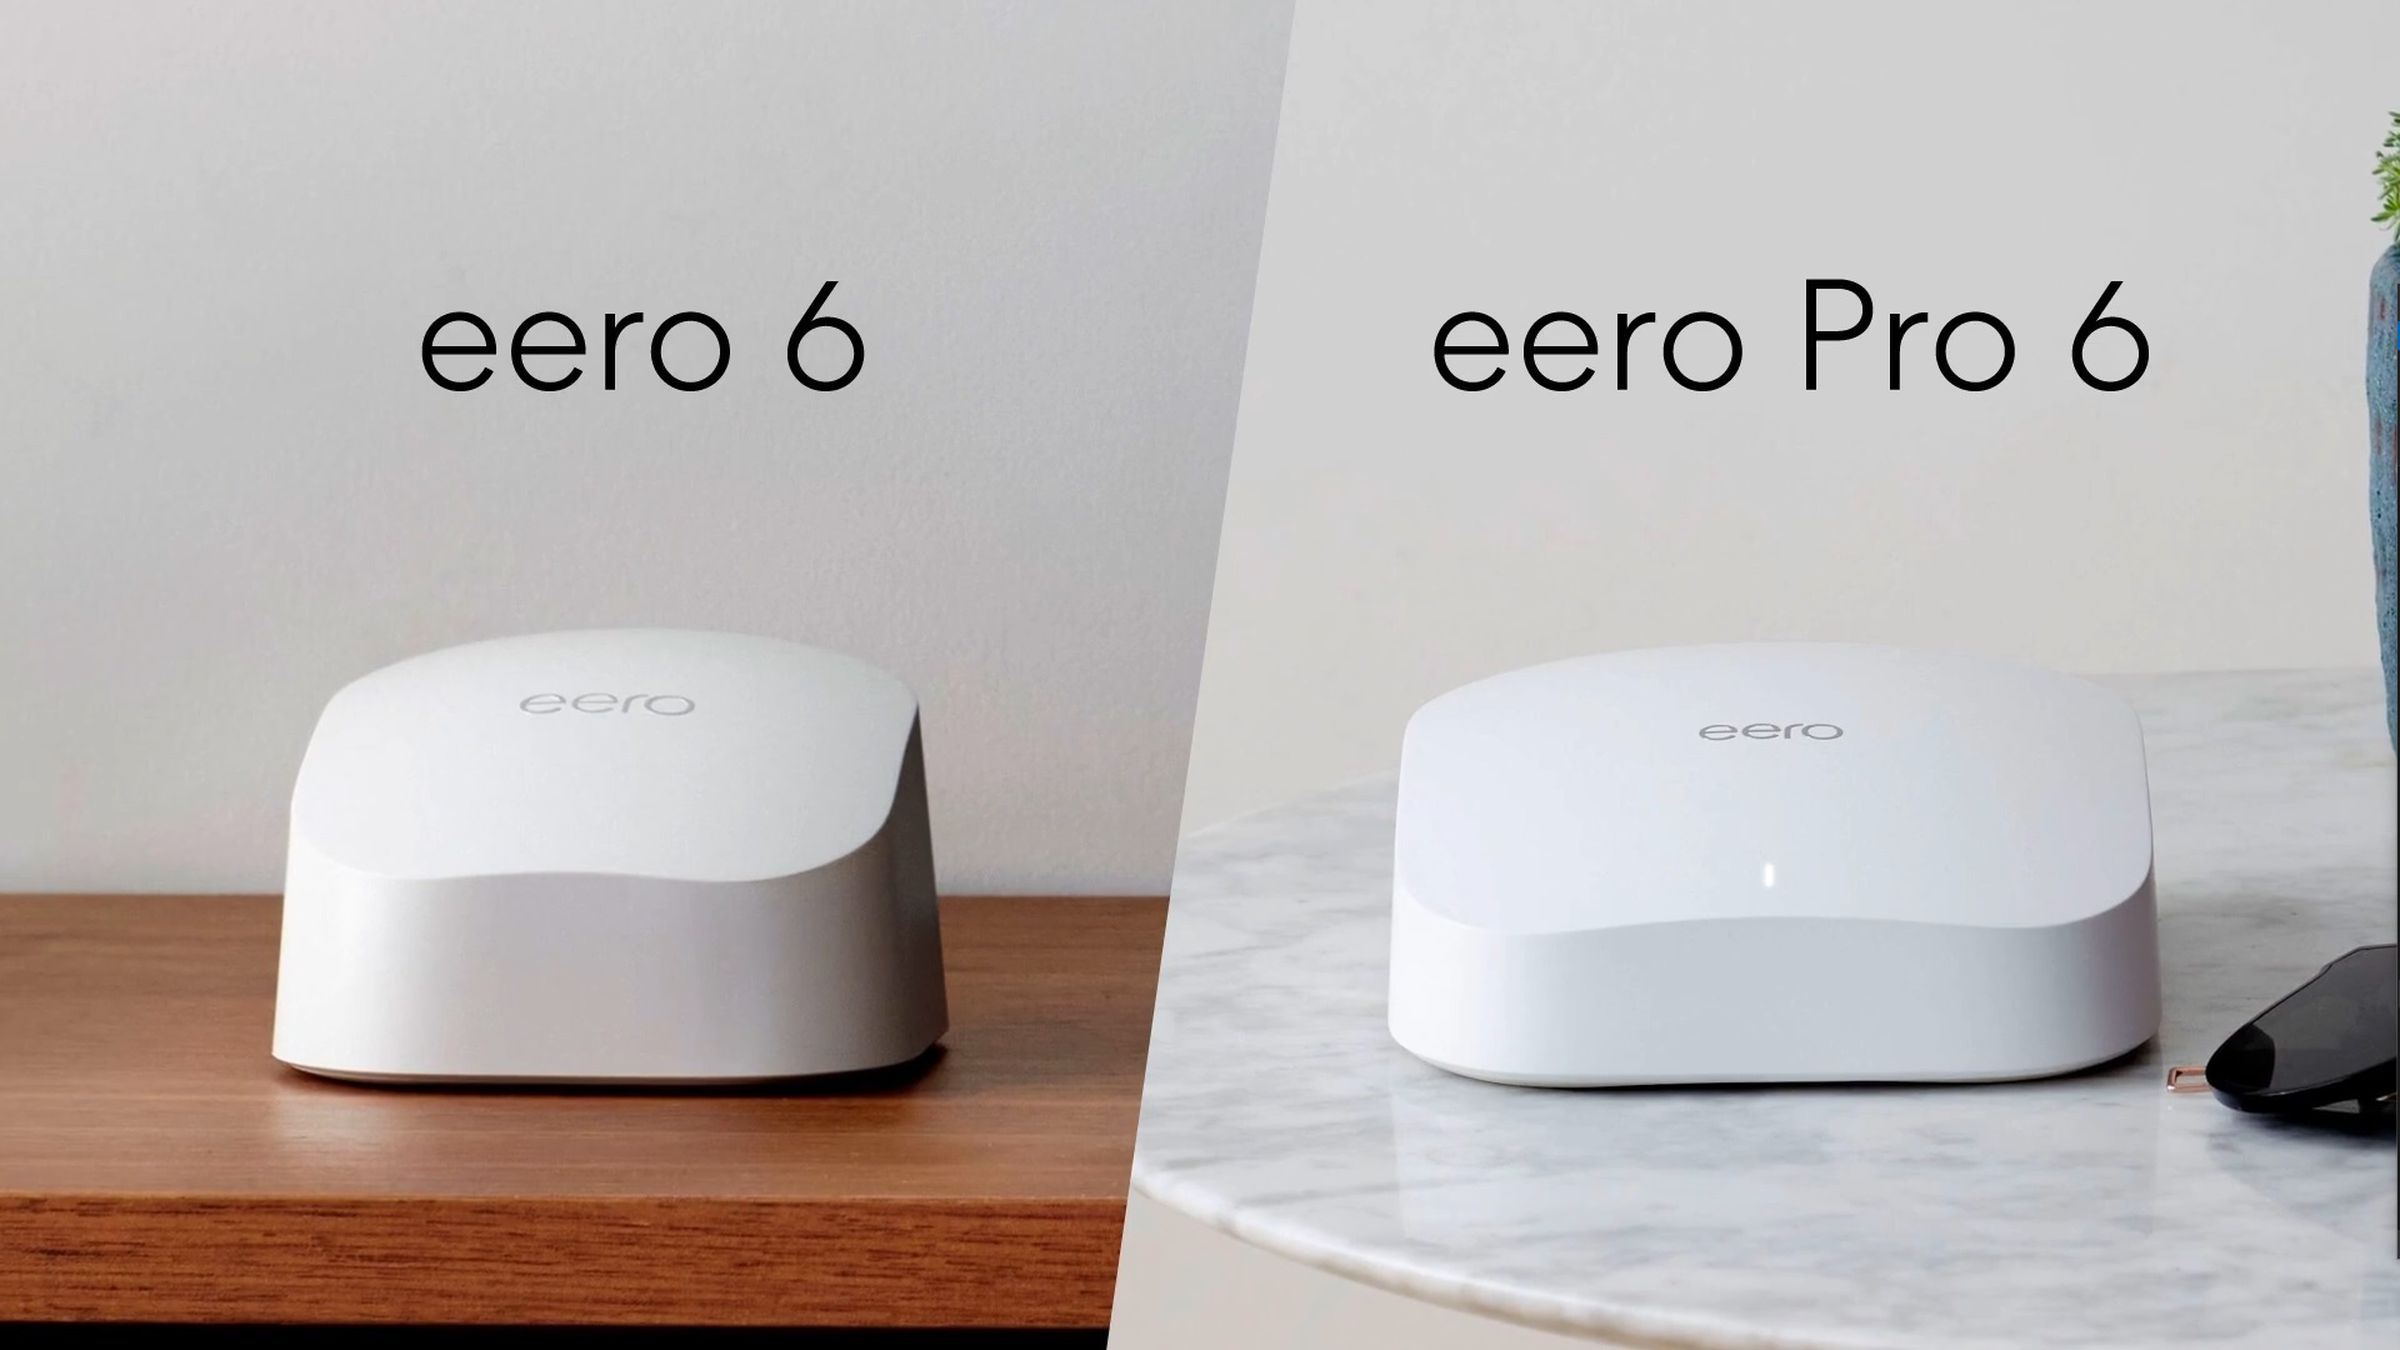 The Eero Pro 6 is bigger than the standard Eero 6.